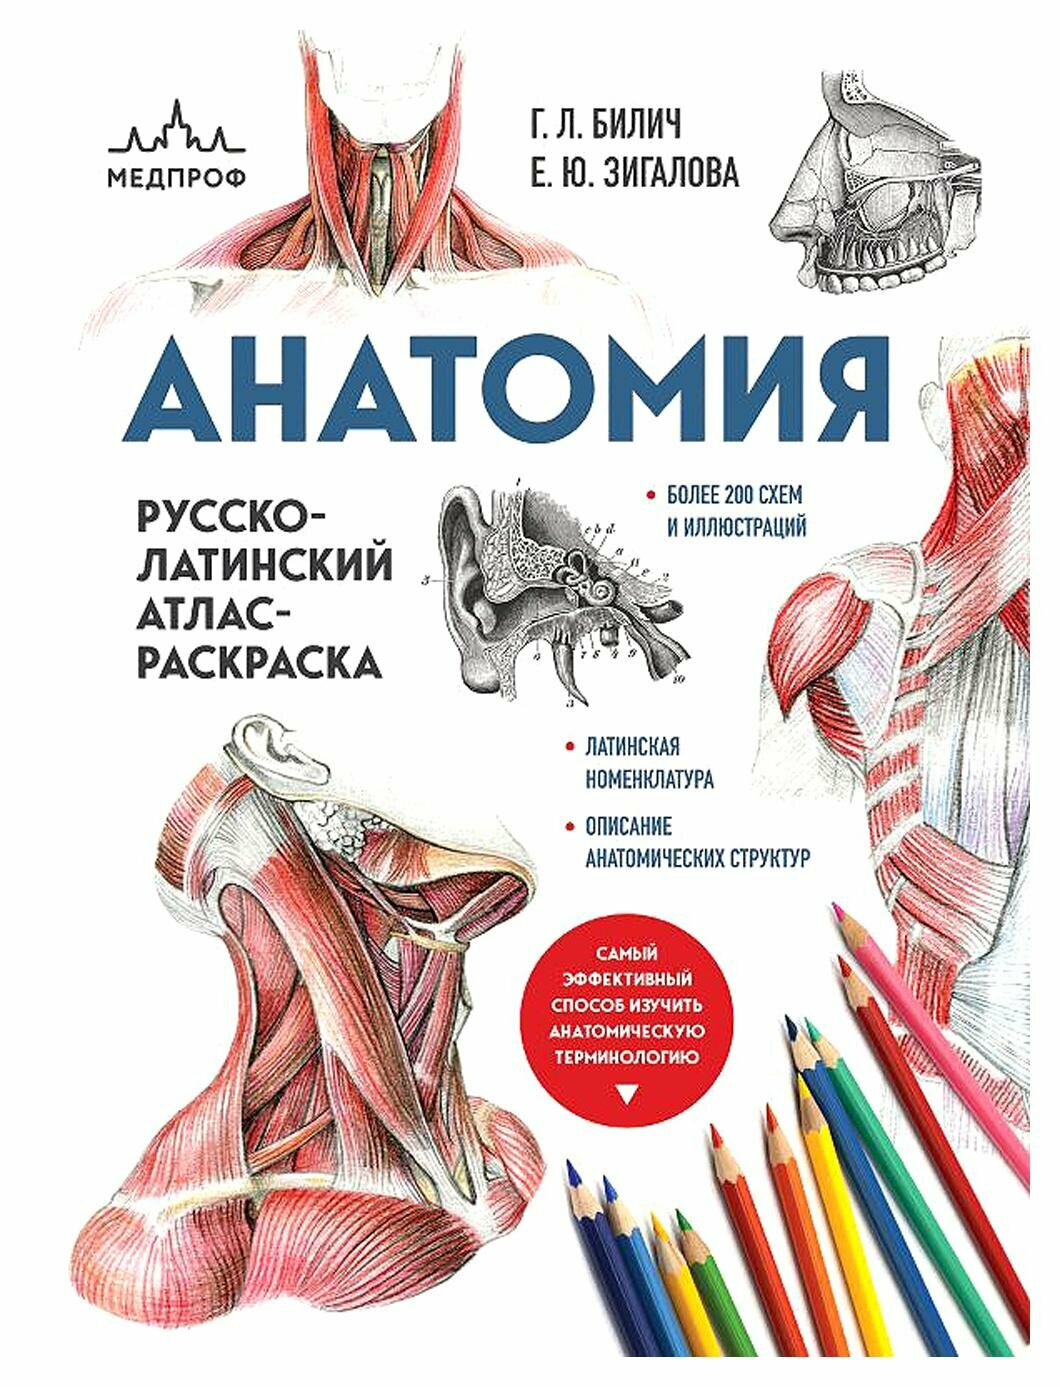 Анатомия: русско-латинский атлас-раскраска. Билич Г. Л, Зигалова Е. Ю. ЭКСМО